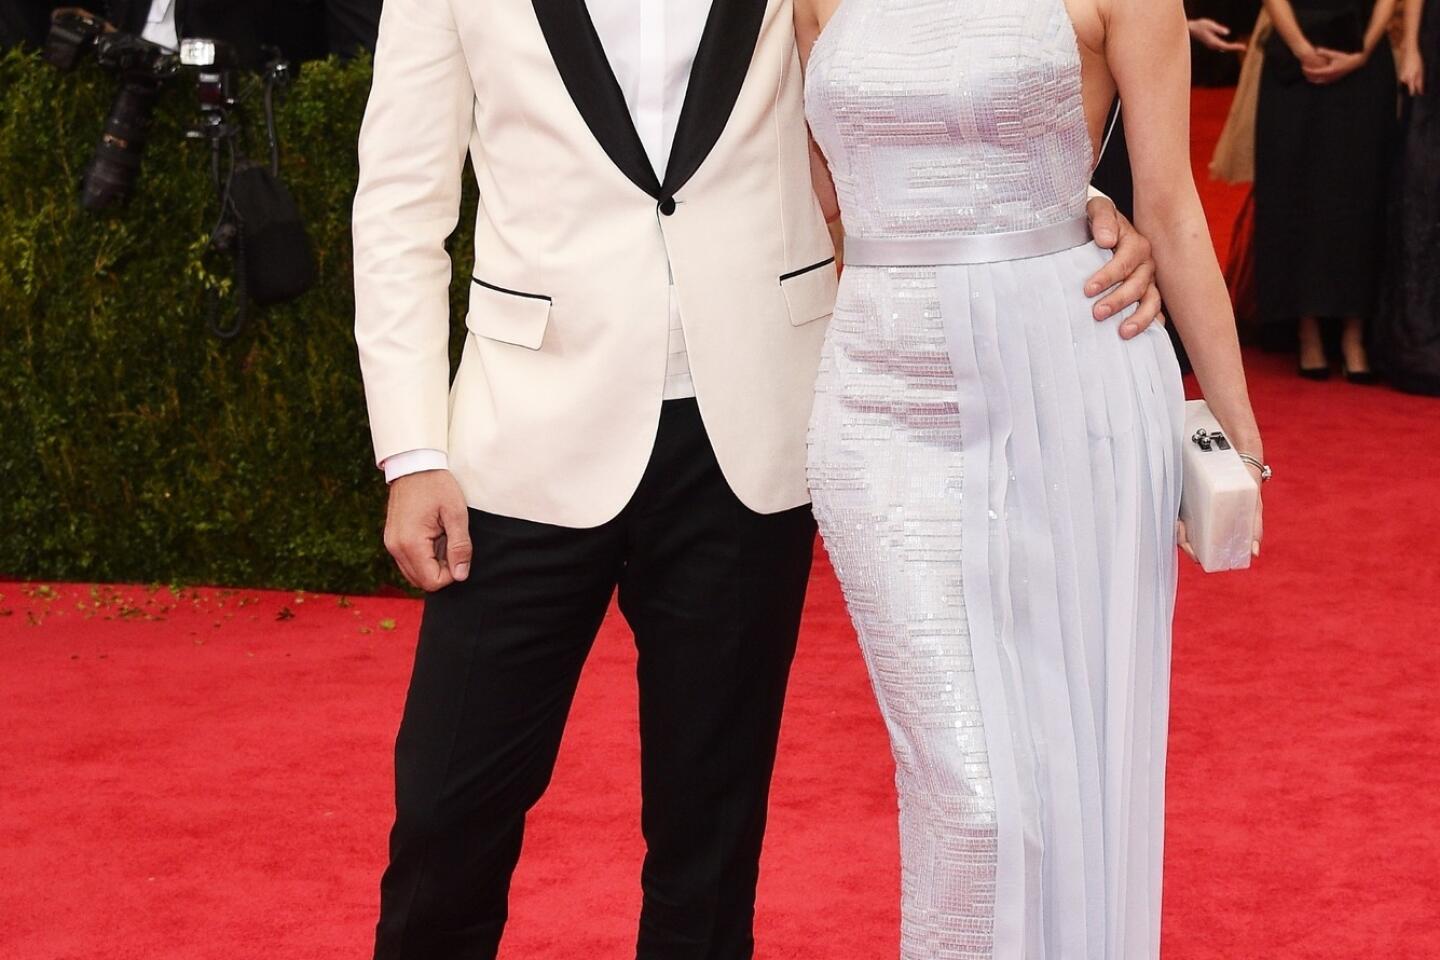 2014 Met Ball couples | Joshua Jackson and Diane Kruger